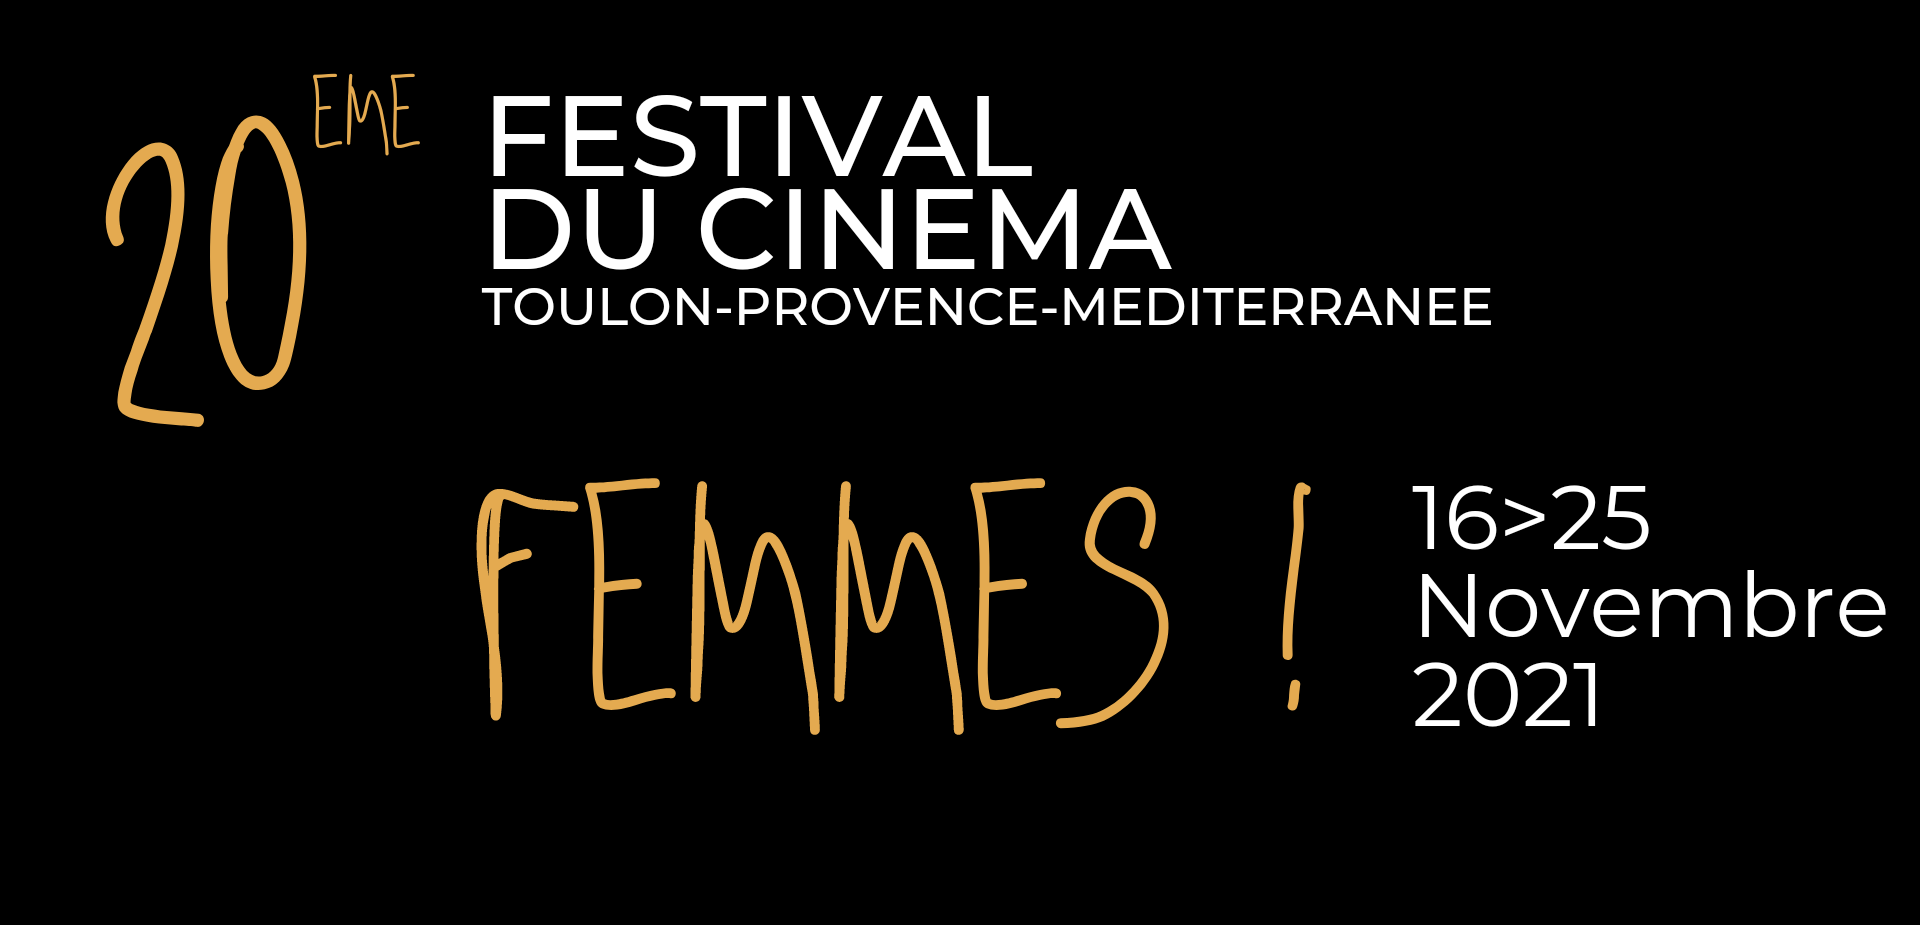 FEMMES Festival International du Cinéma - Toulon Provence Méditerranée v4